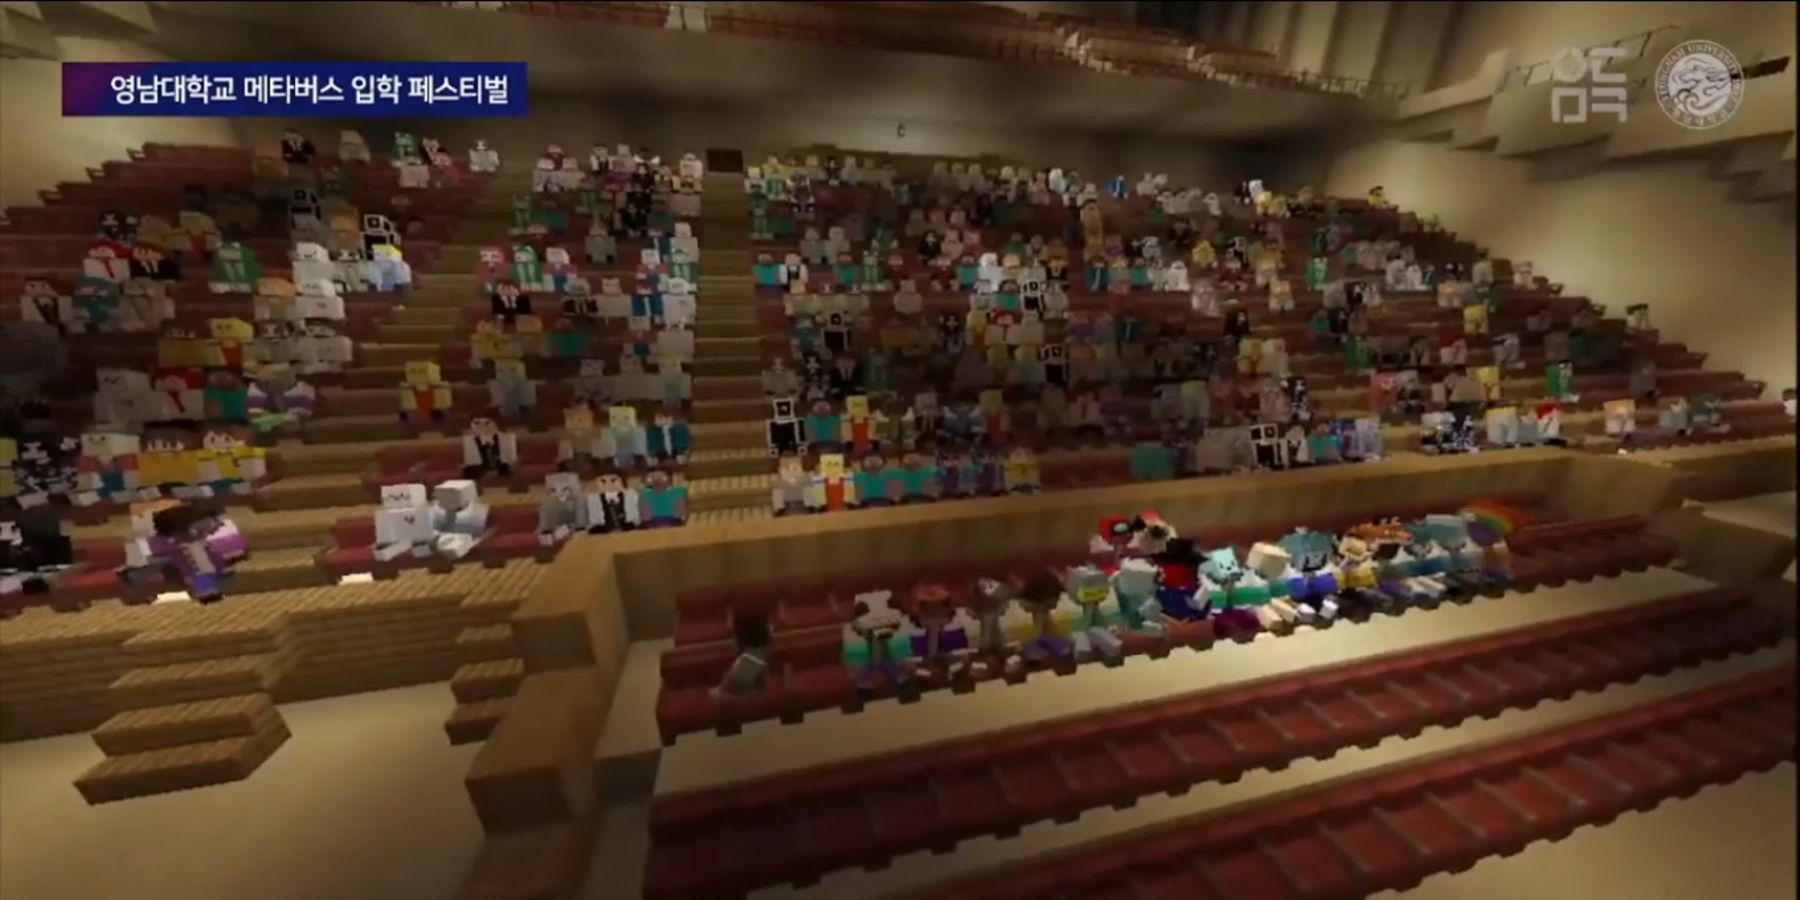 minecraft yeungnam university auditorium ceremony